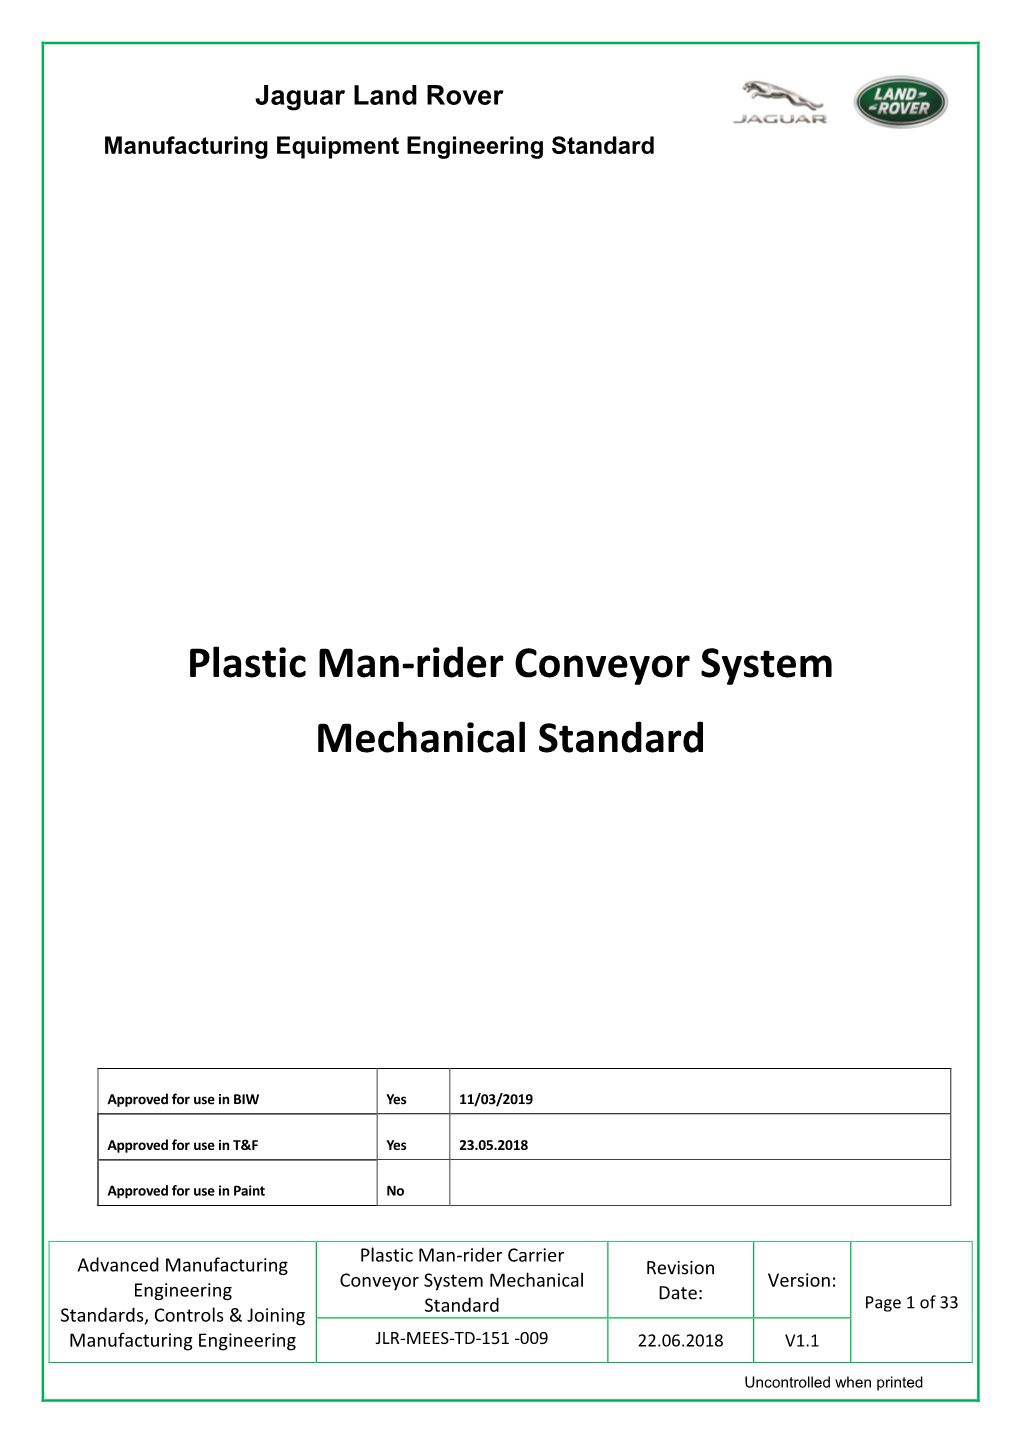 Plastic Man-Rider Conveyor System Mechanical Standard